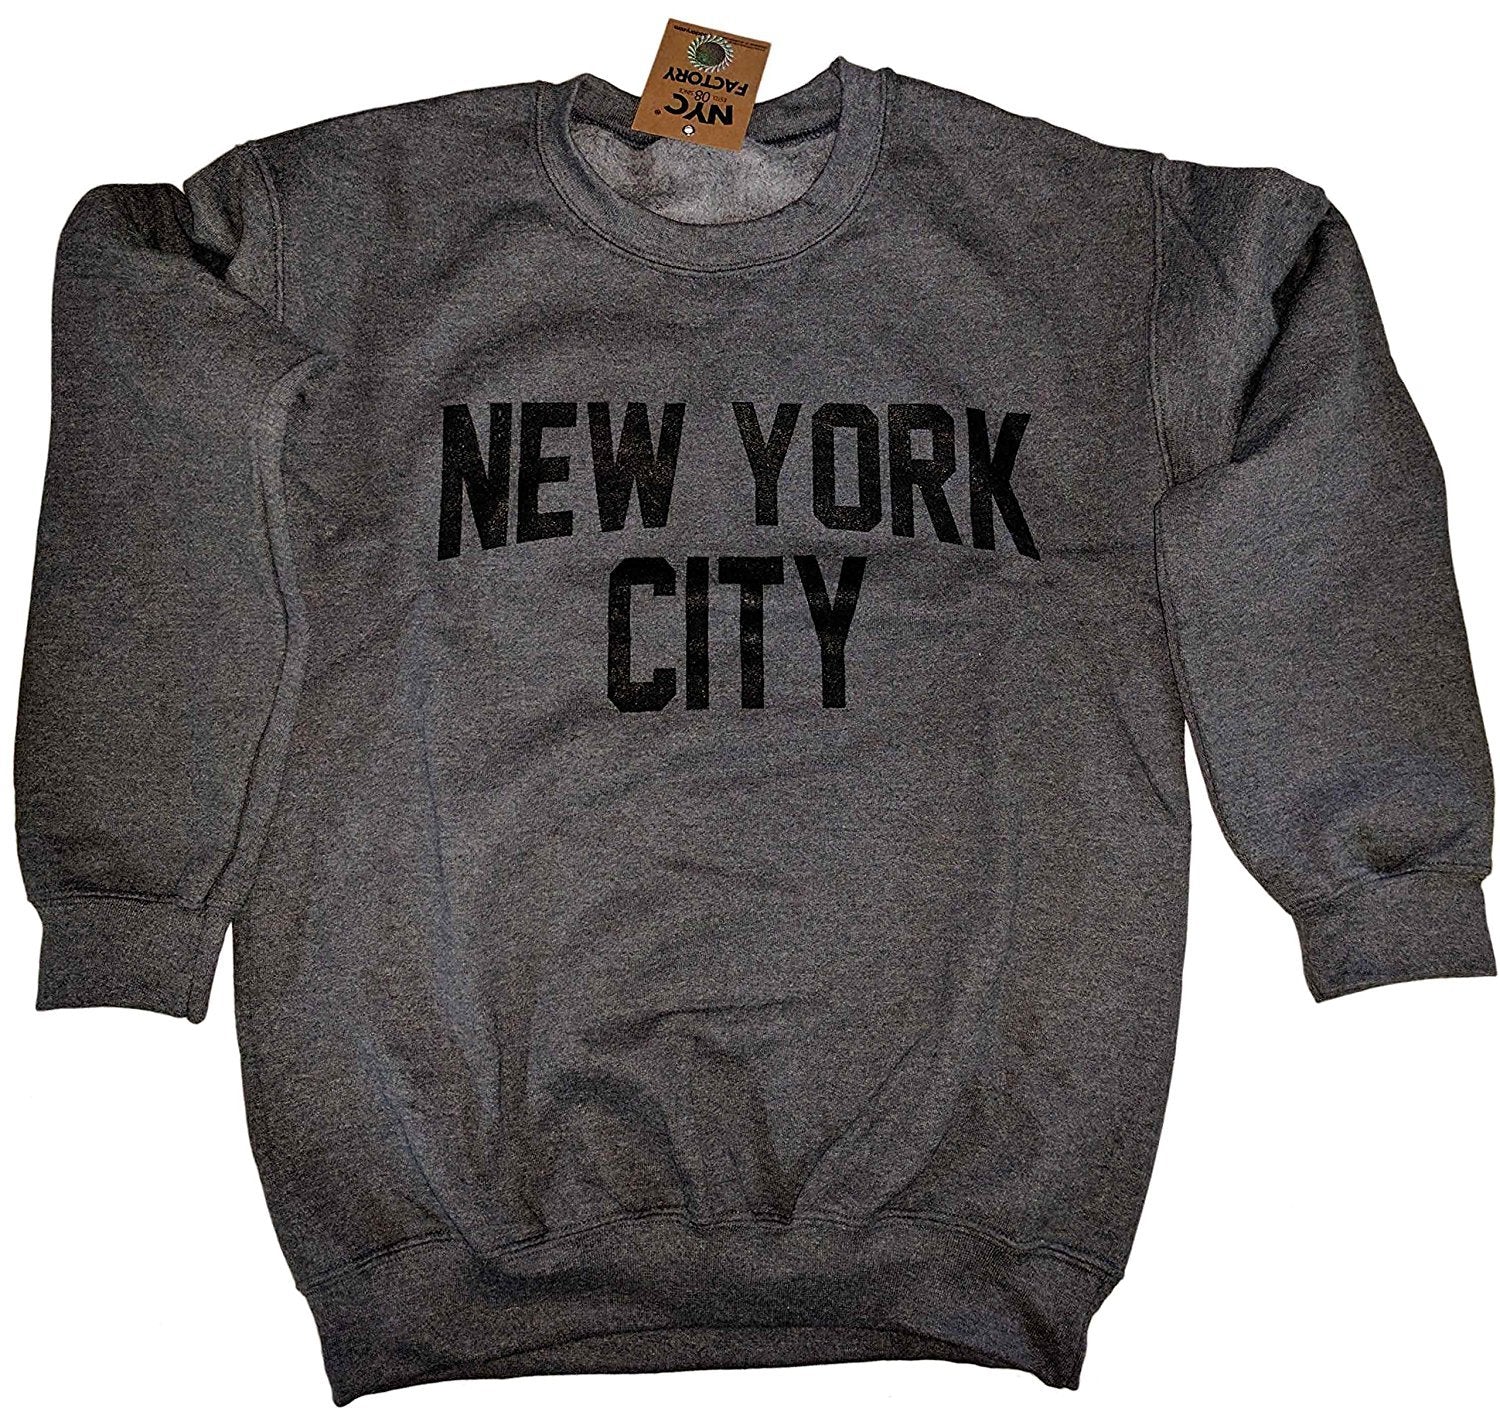 New York City Crewneck Sweatshirt Lennon Shirt Dark Heather